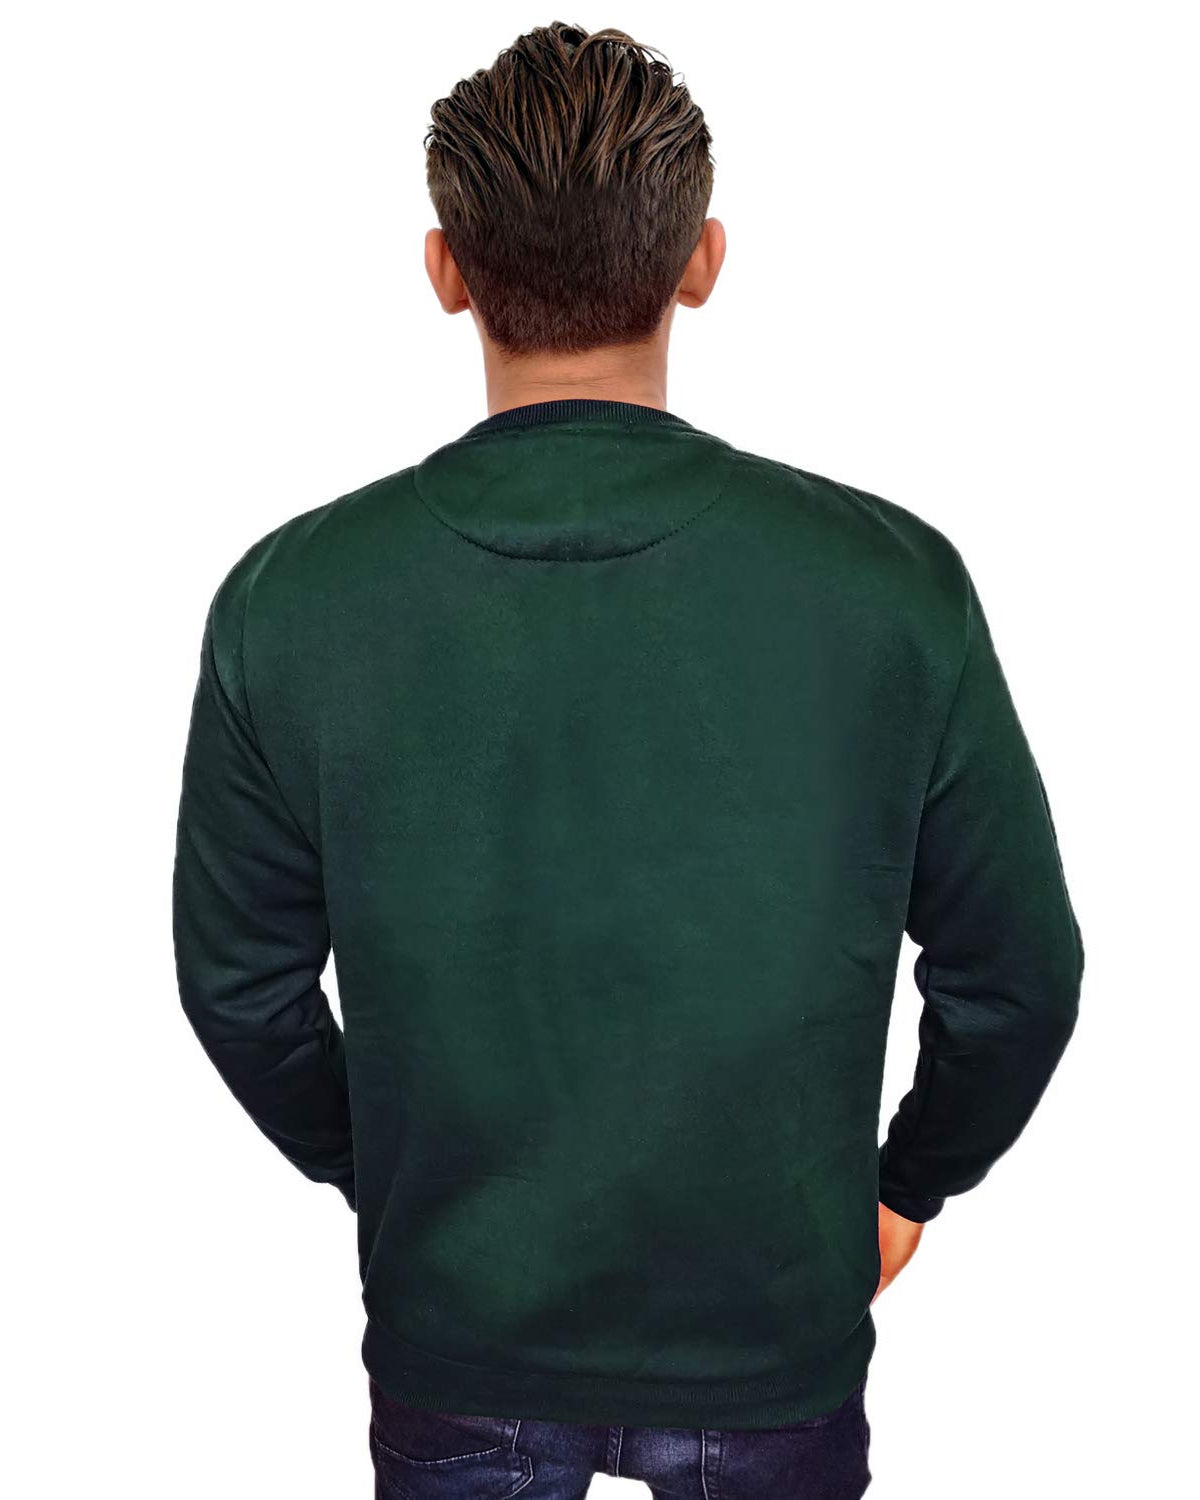 Prokick Men's Round Neck Sweatshirt - Olive - Best Price online Prokicksports.com